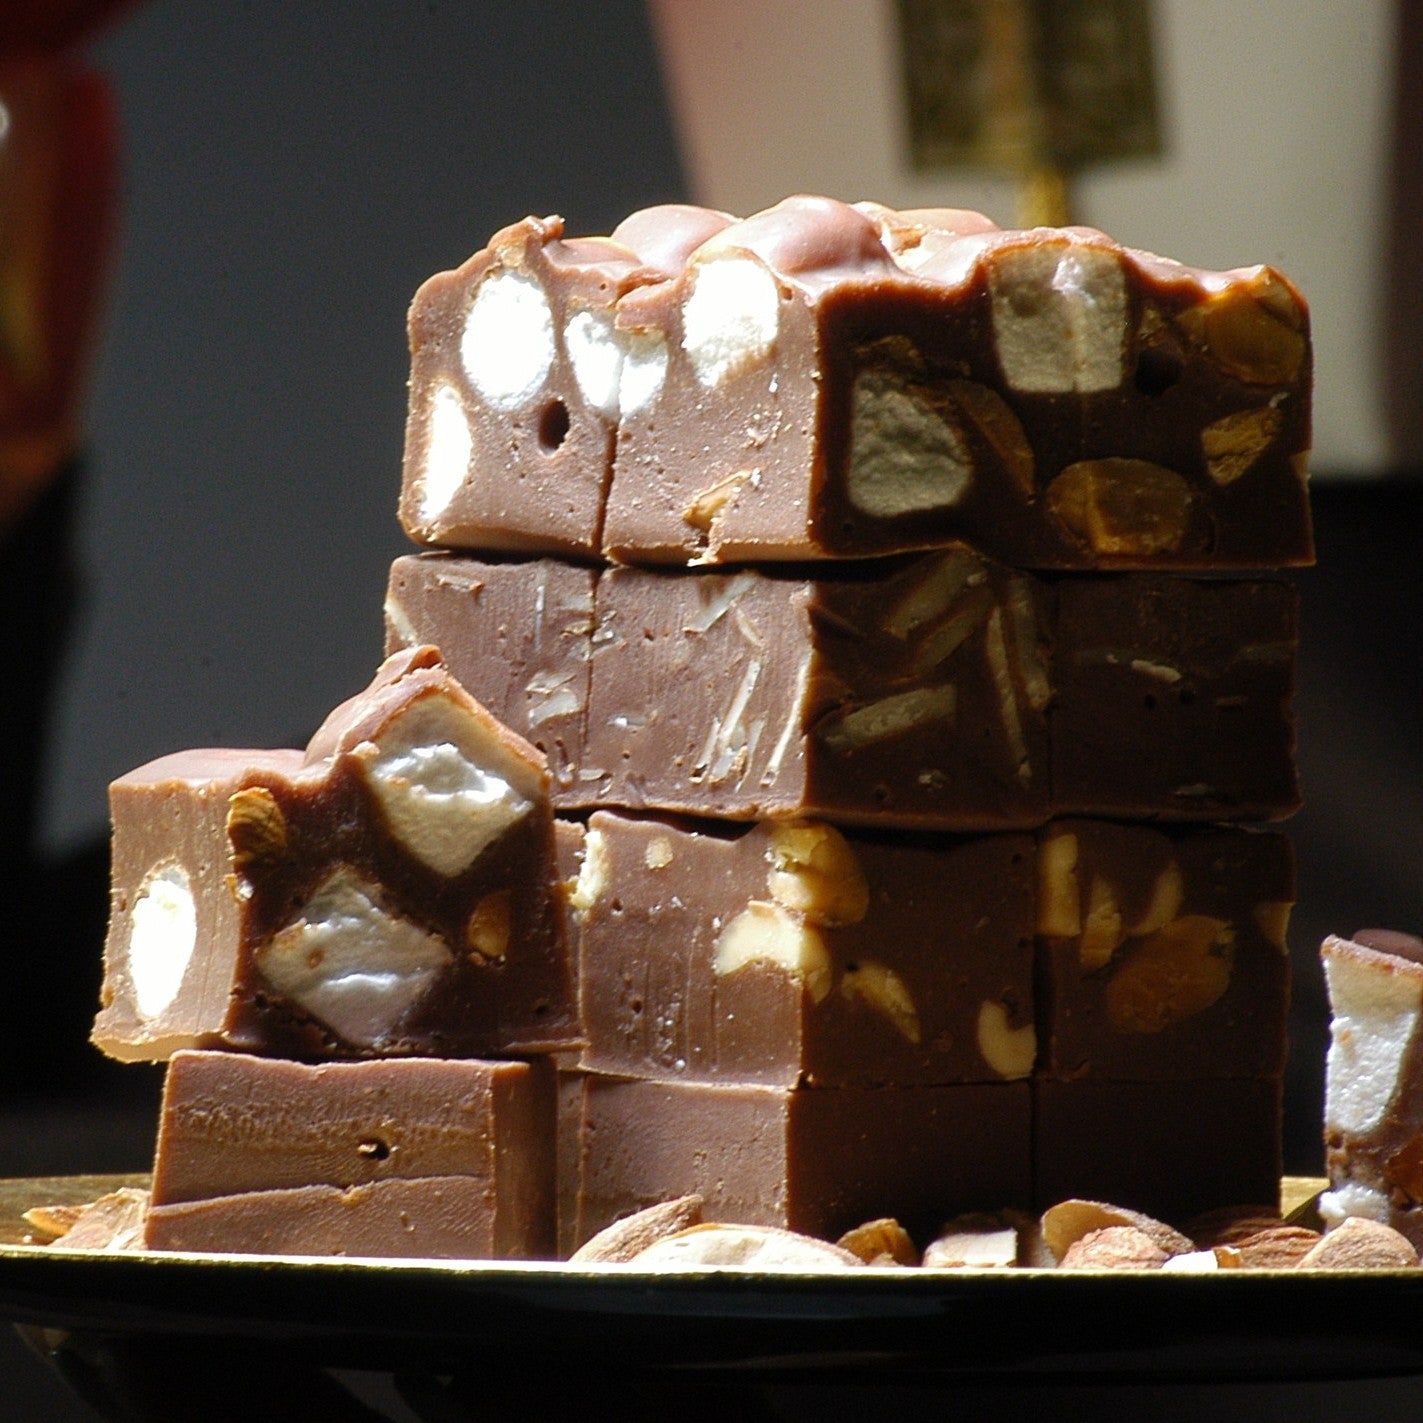 Large – 36 pc Chocolate Silk Box (4 flavors)